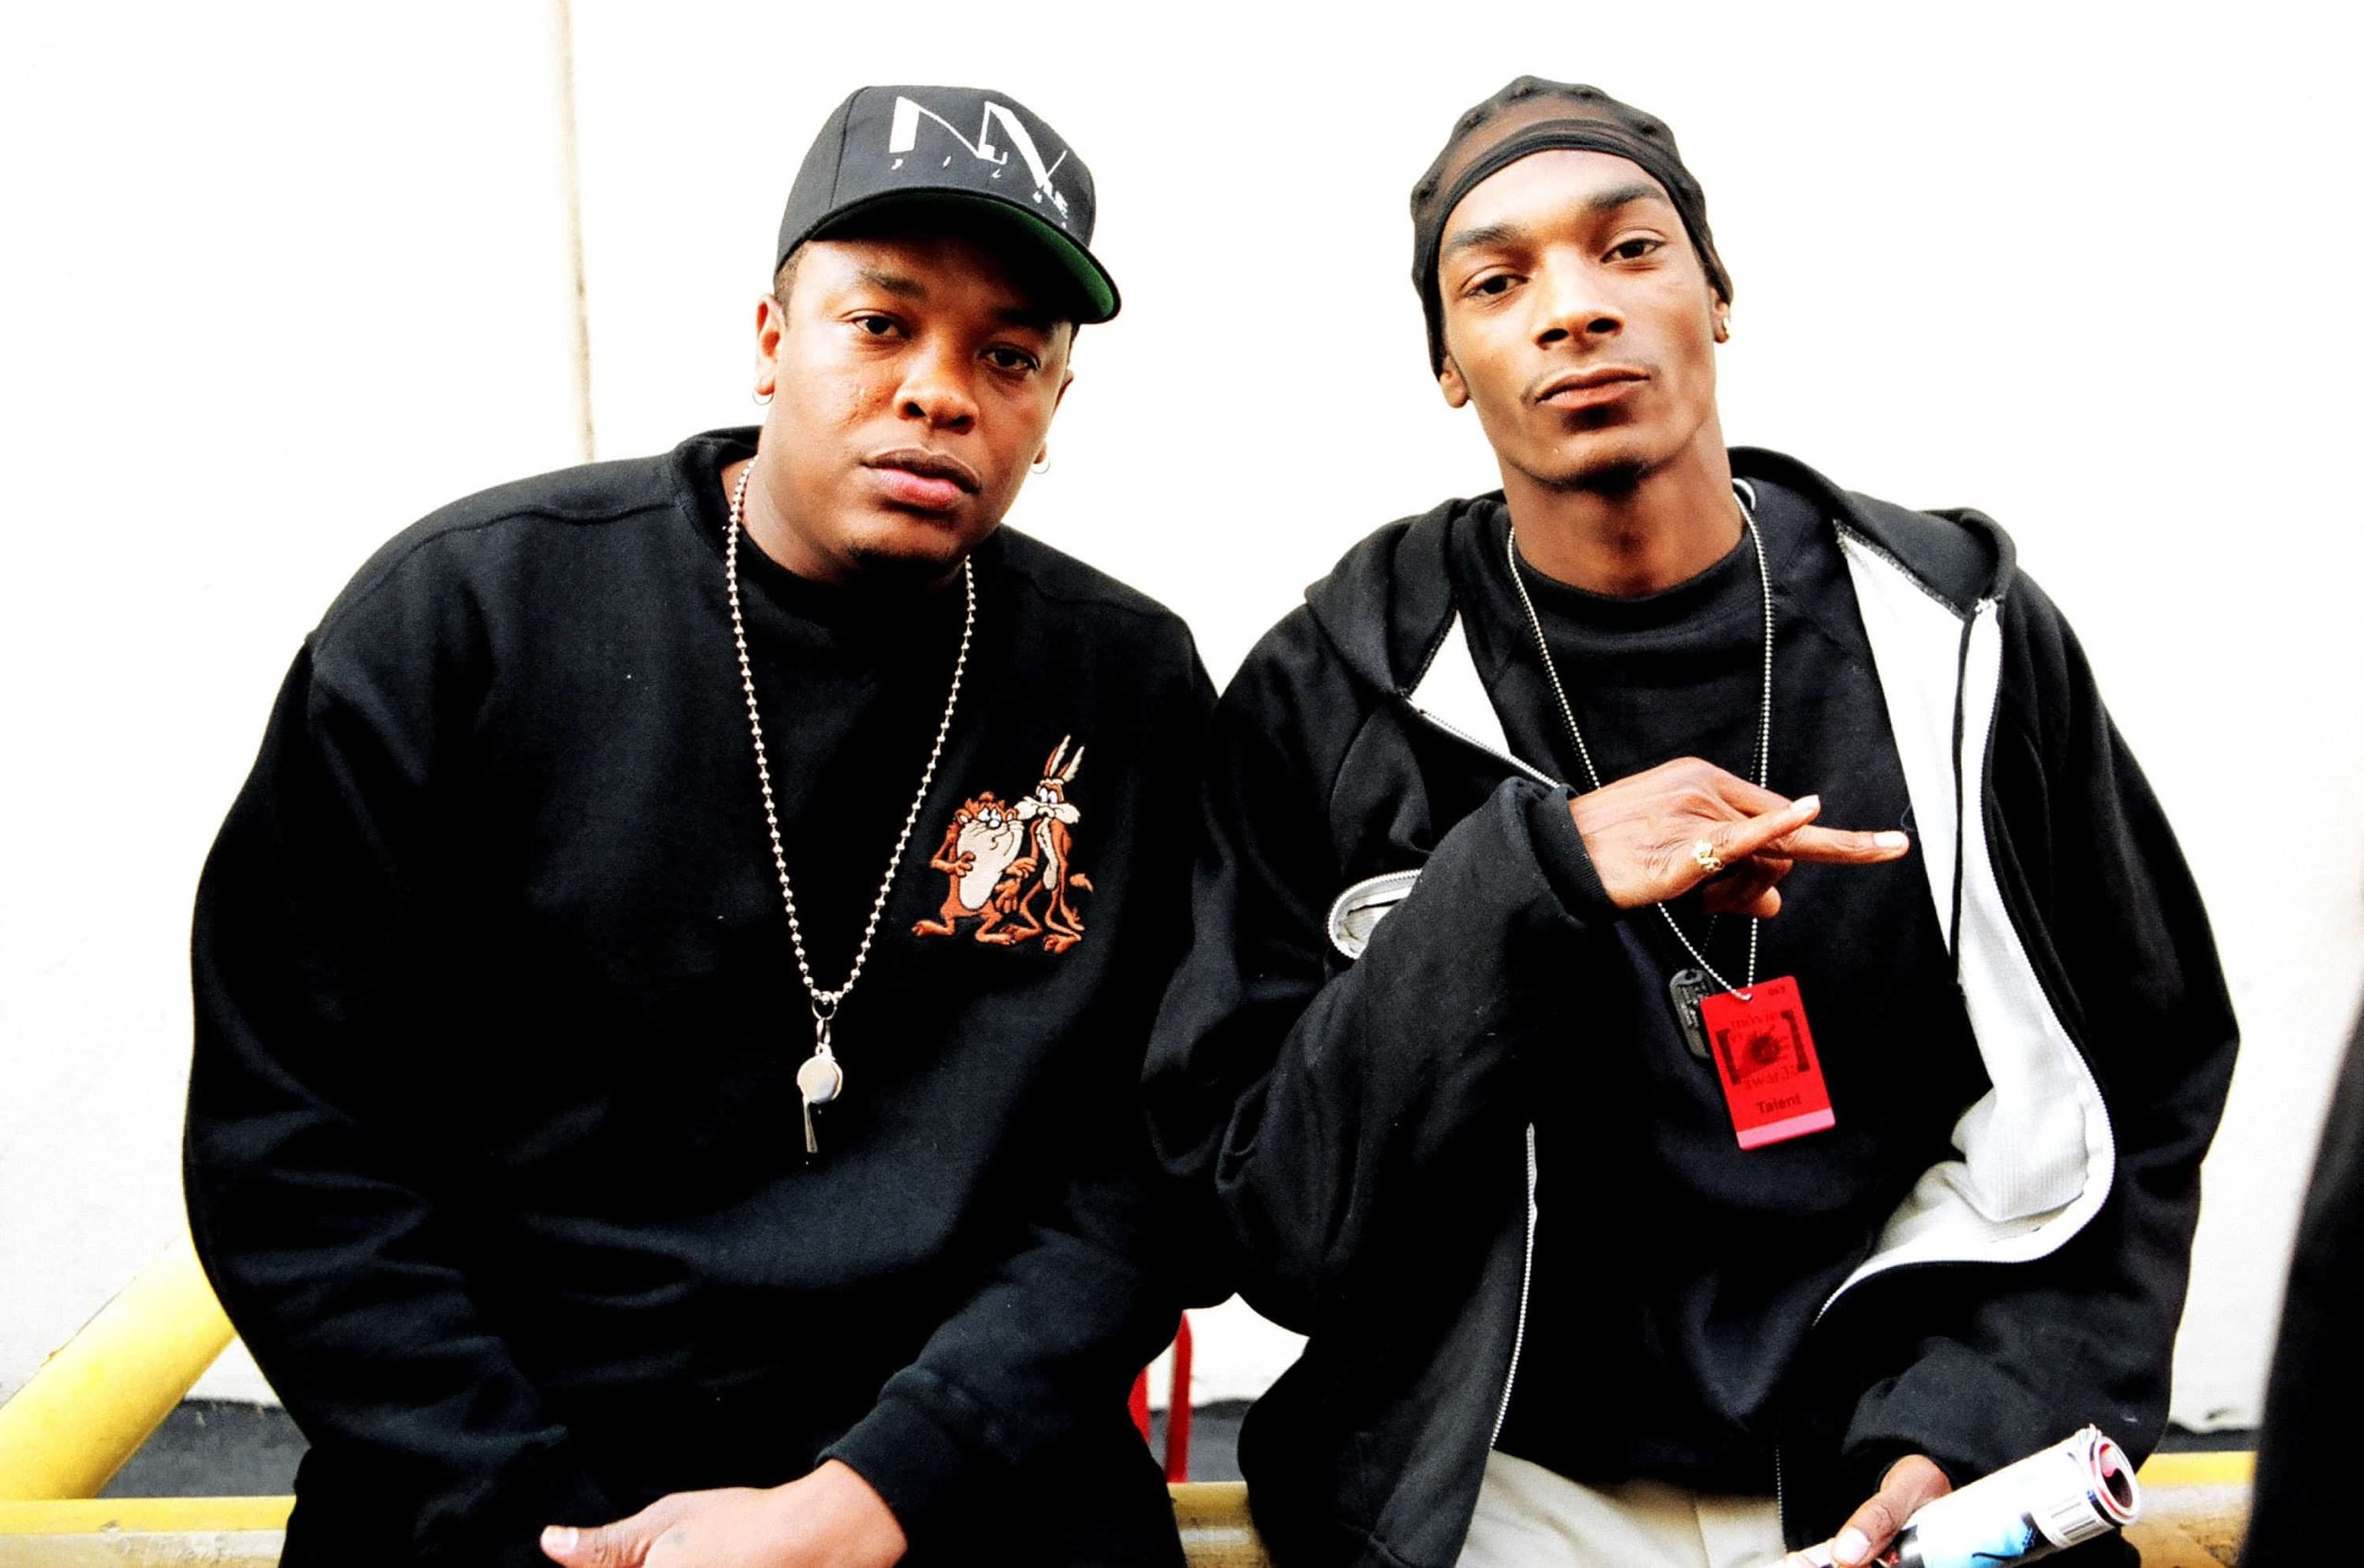 Music video for Dr. Dre & Snoop Dogg collaboration 'Still D.R.E' passes 1 Billion views